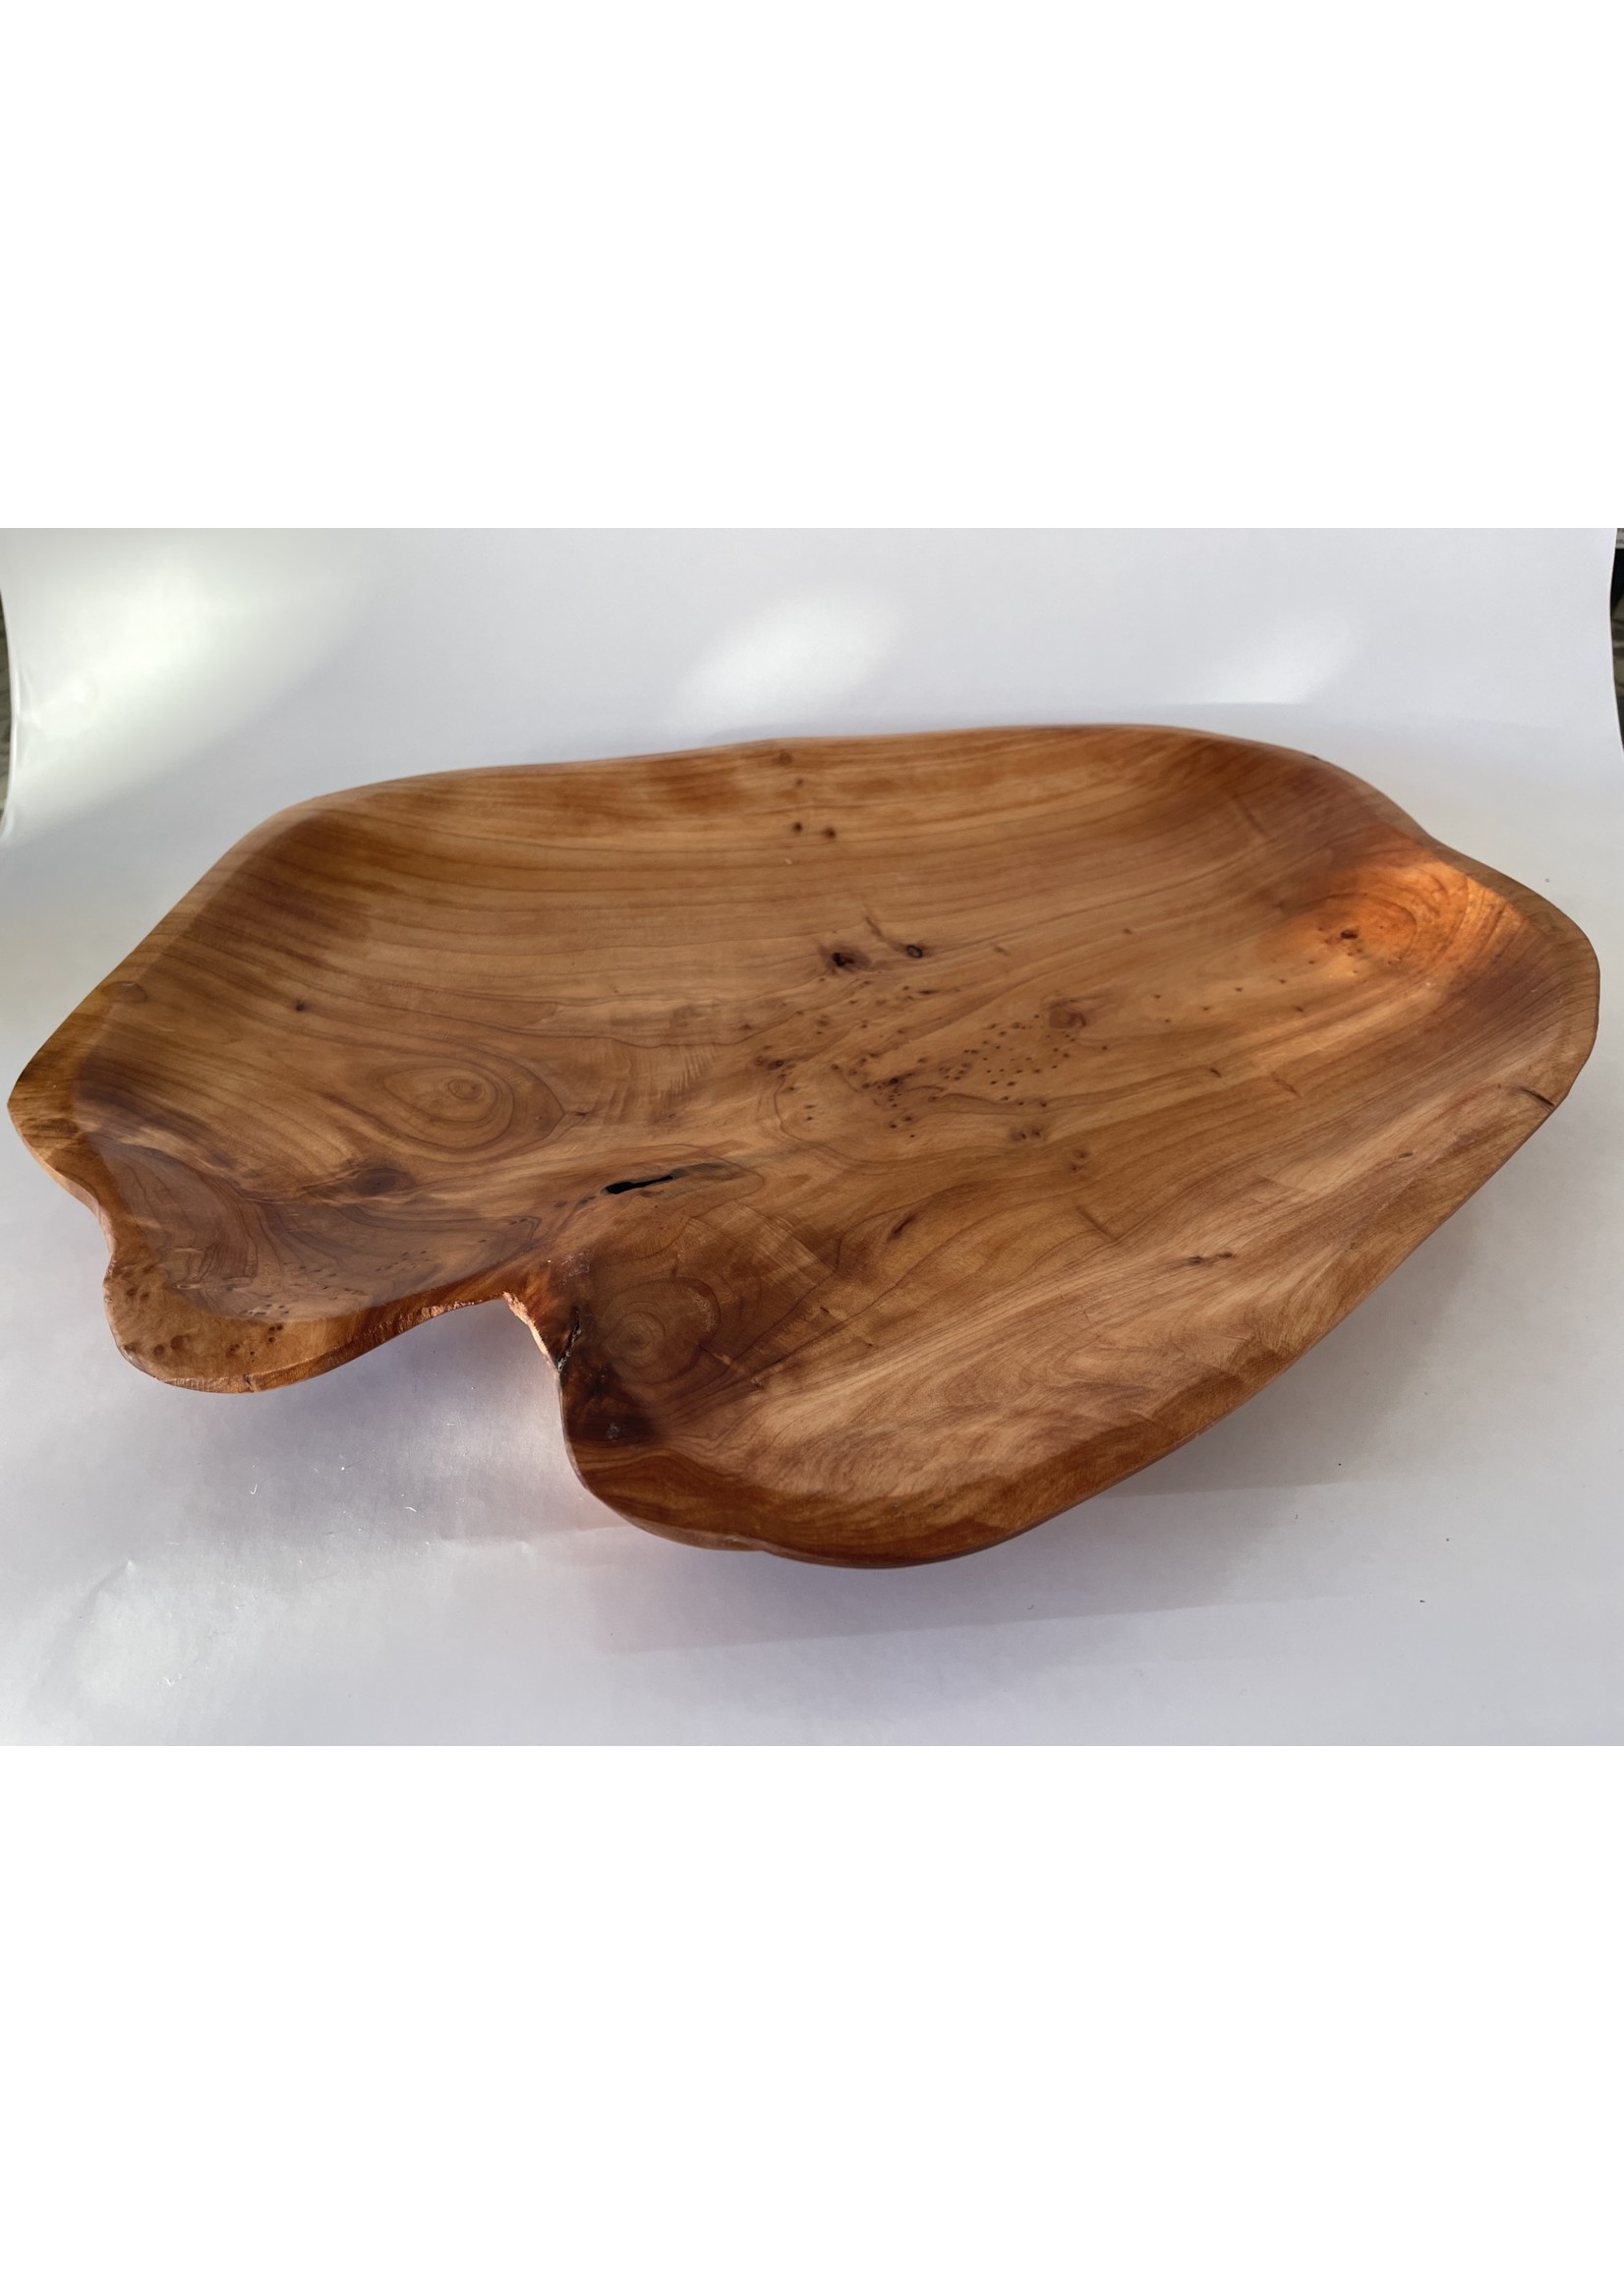 Torre & Tagus Costa Carved Wooden Platter